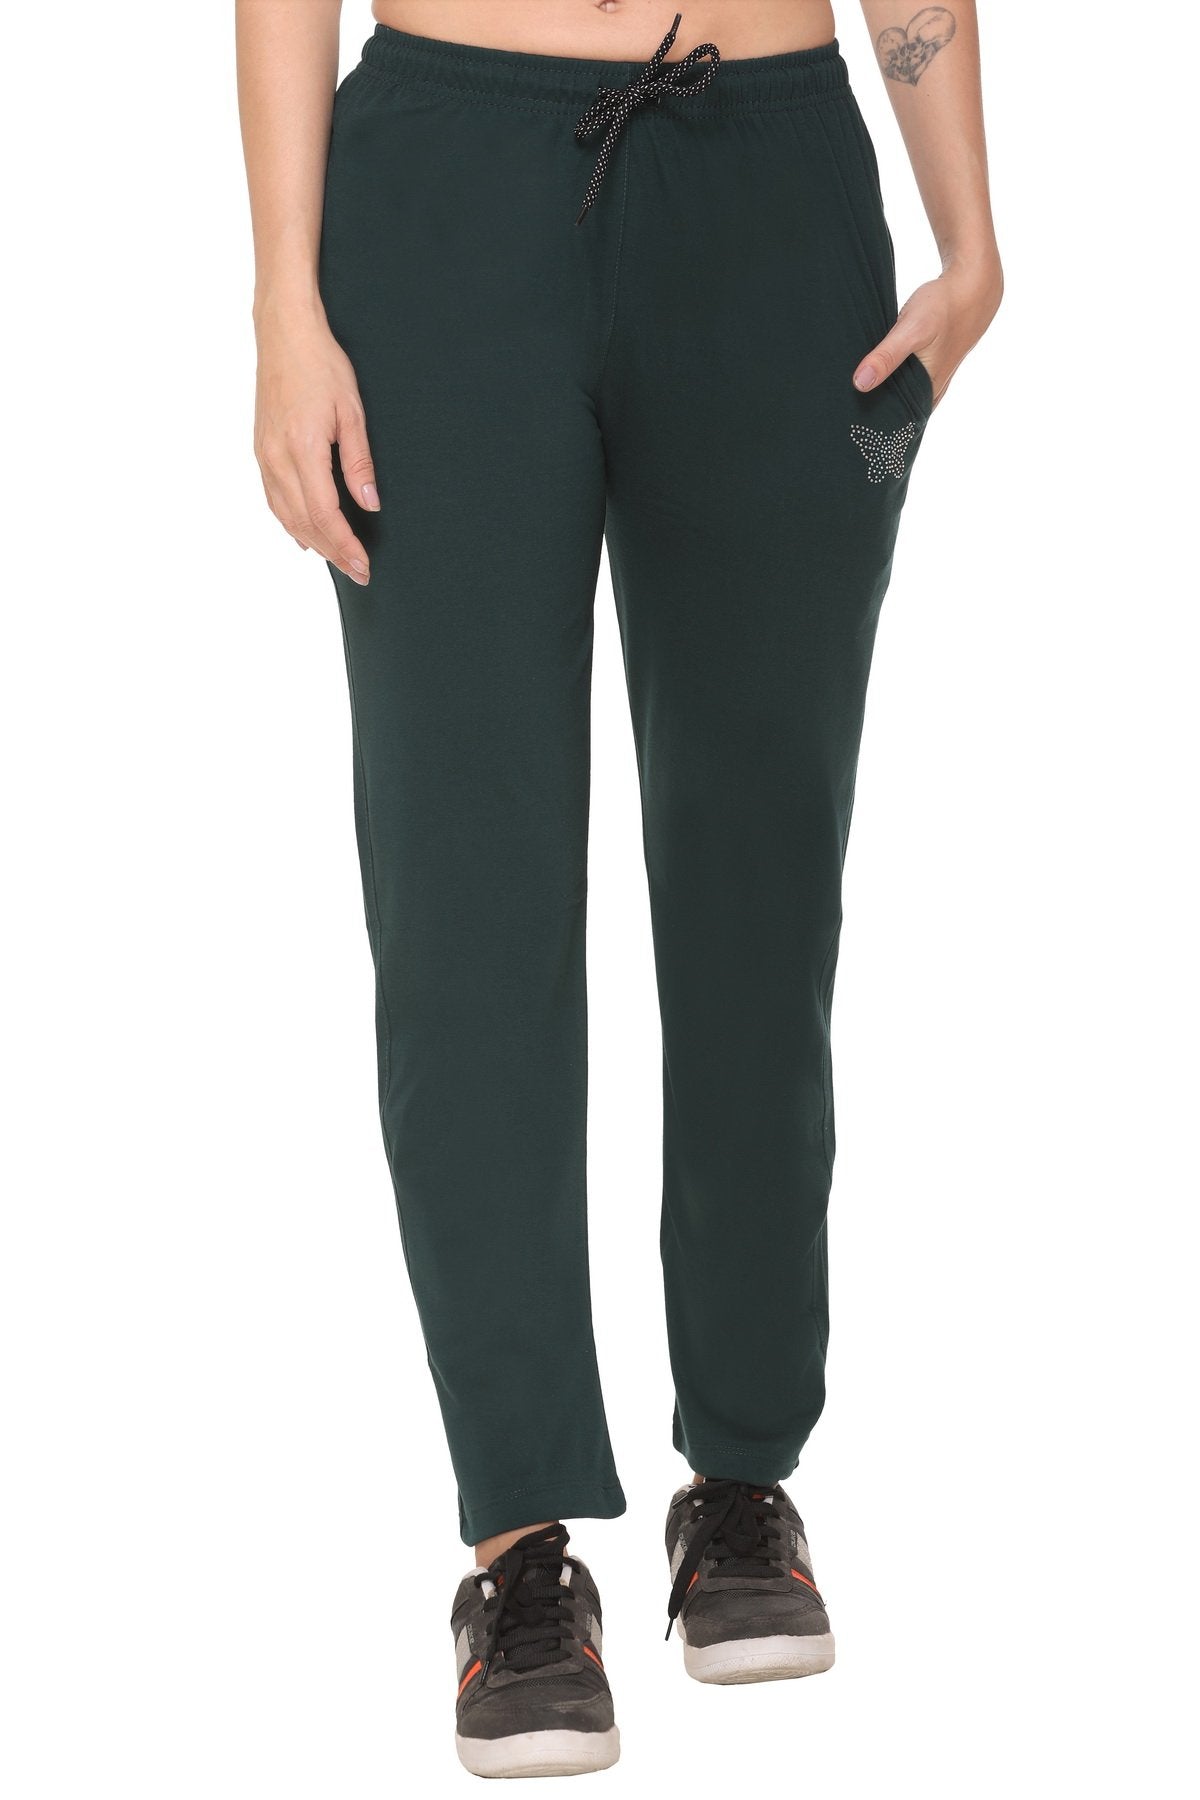 Buy C9 Cotton Track pants - Black at Rs.1799 online | Activewear online